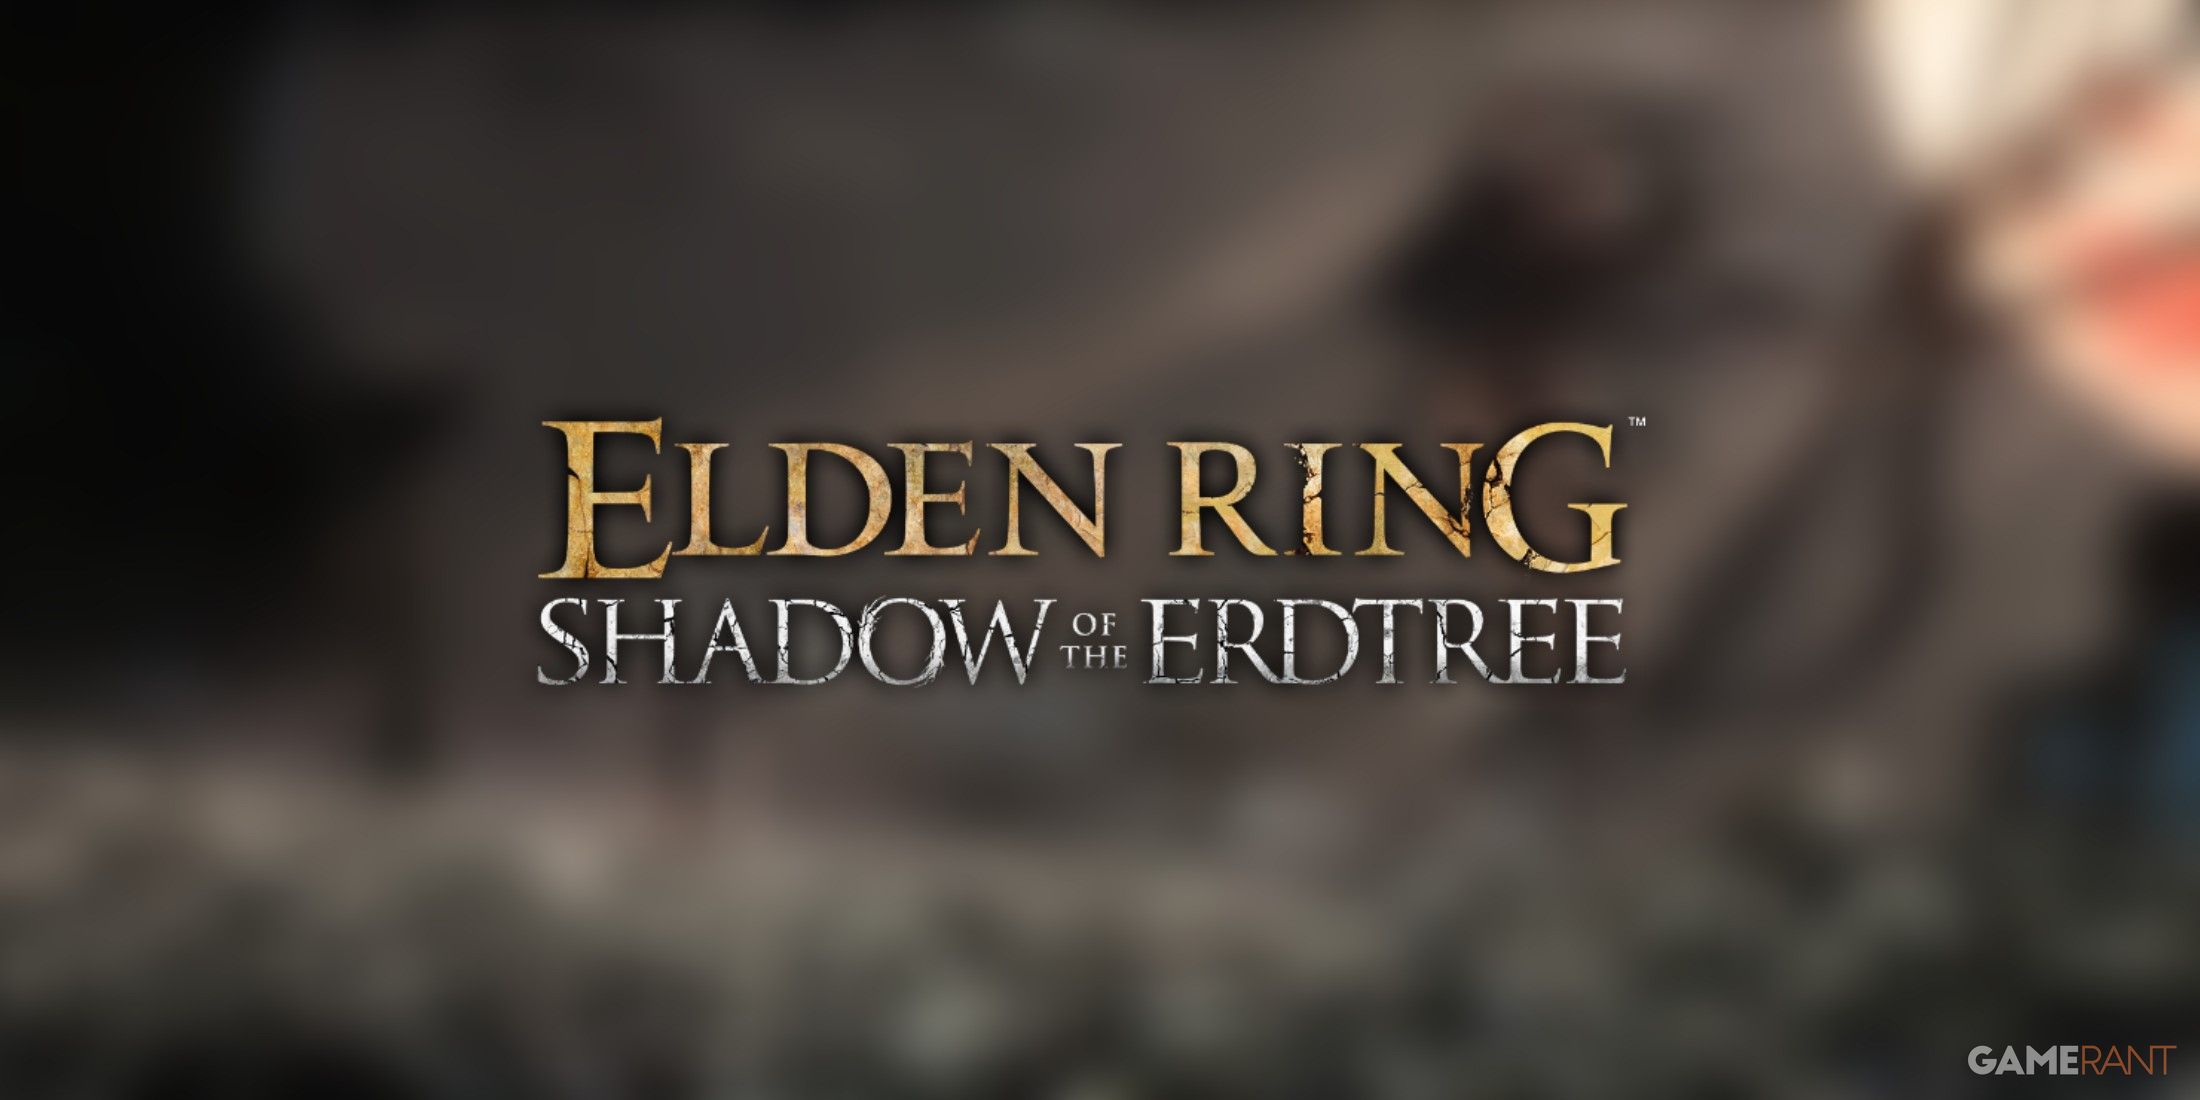 elden ring shadow of the erdtree logo over blurred bloodborne image